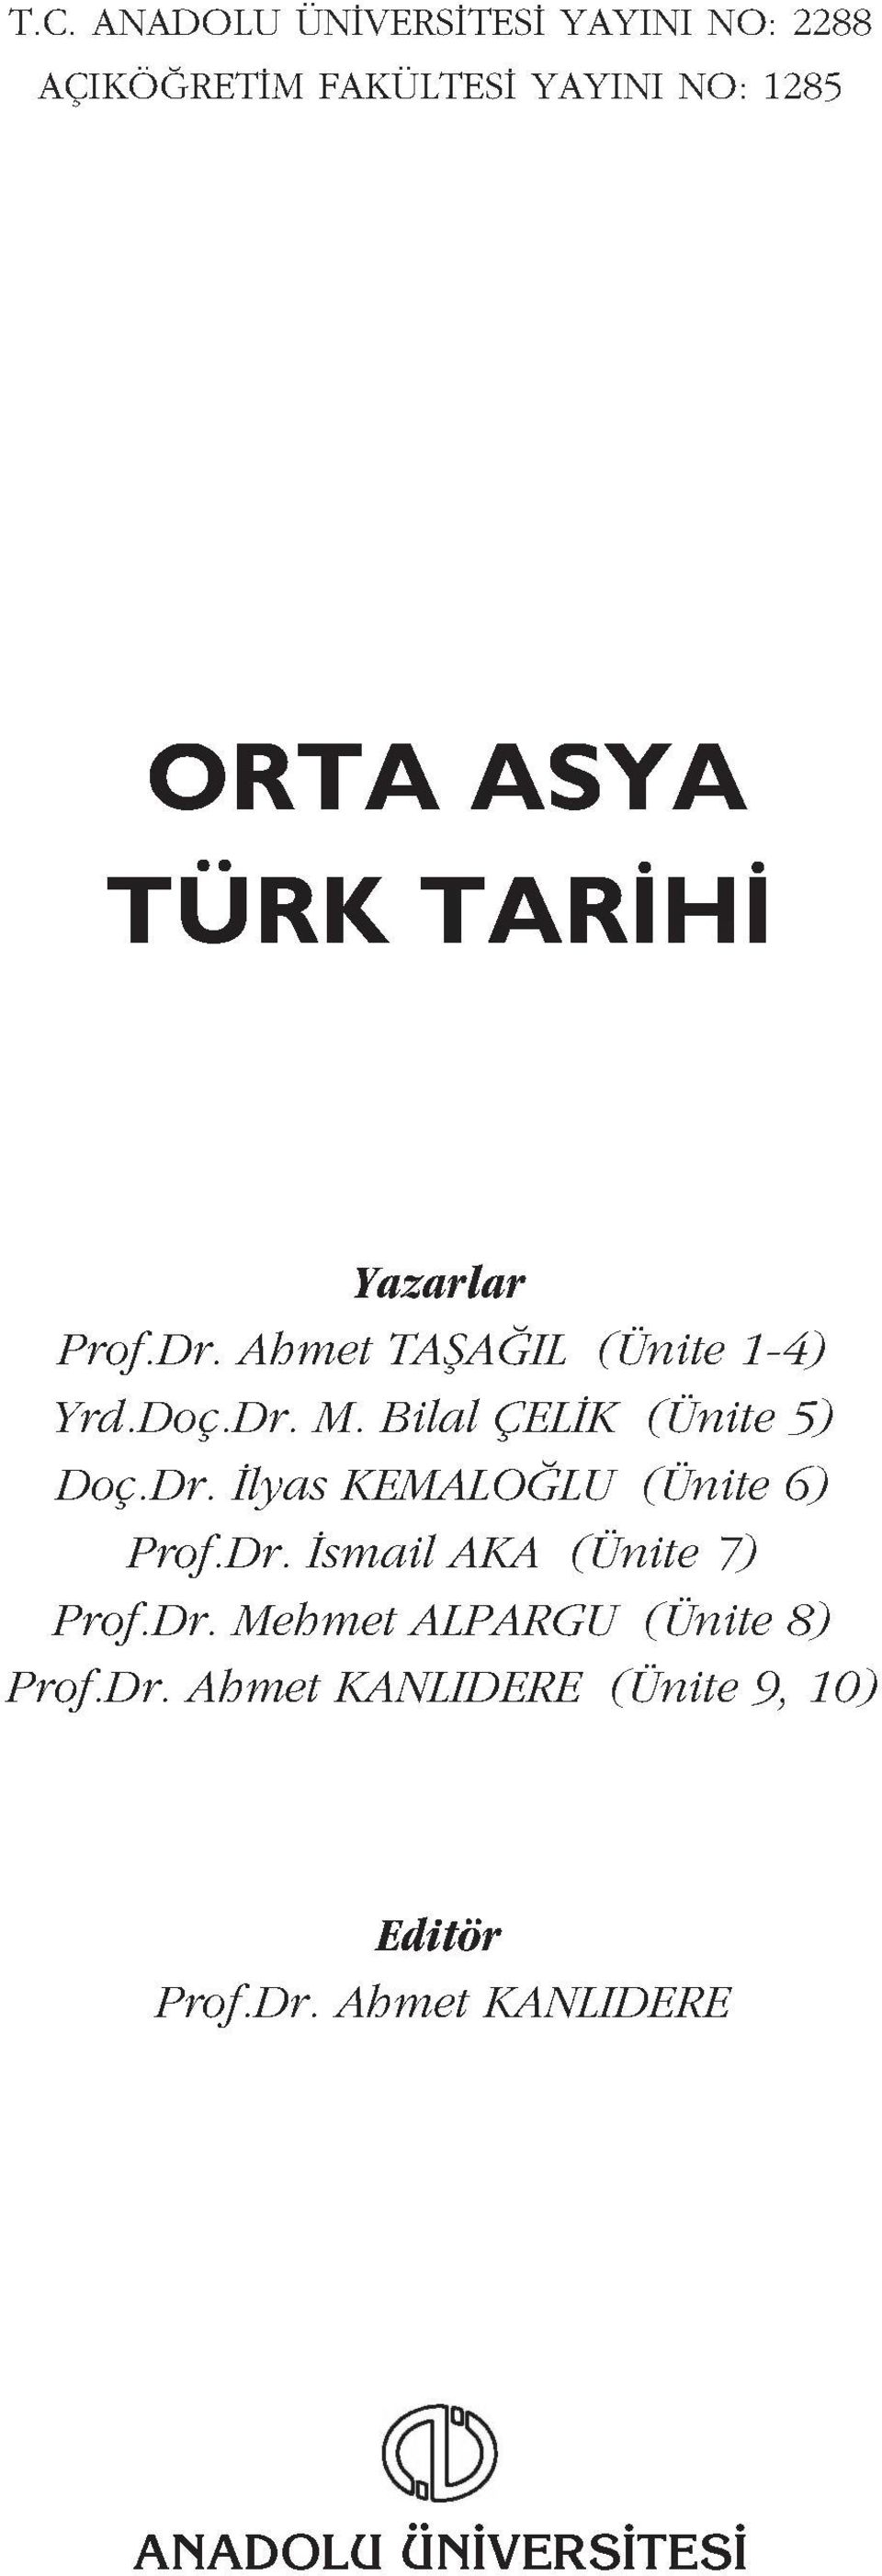 Dr. llyas KEMALOĞLU (Ünite 6) Prof.Dr. İsm ail AKA (Ünite 7) Prof.Dr. M ehm et ALPARGU (Ünite 8) Prof.